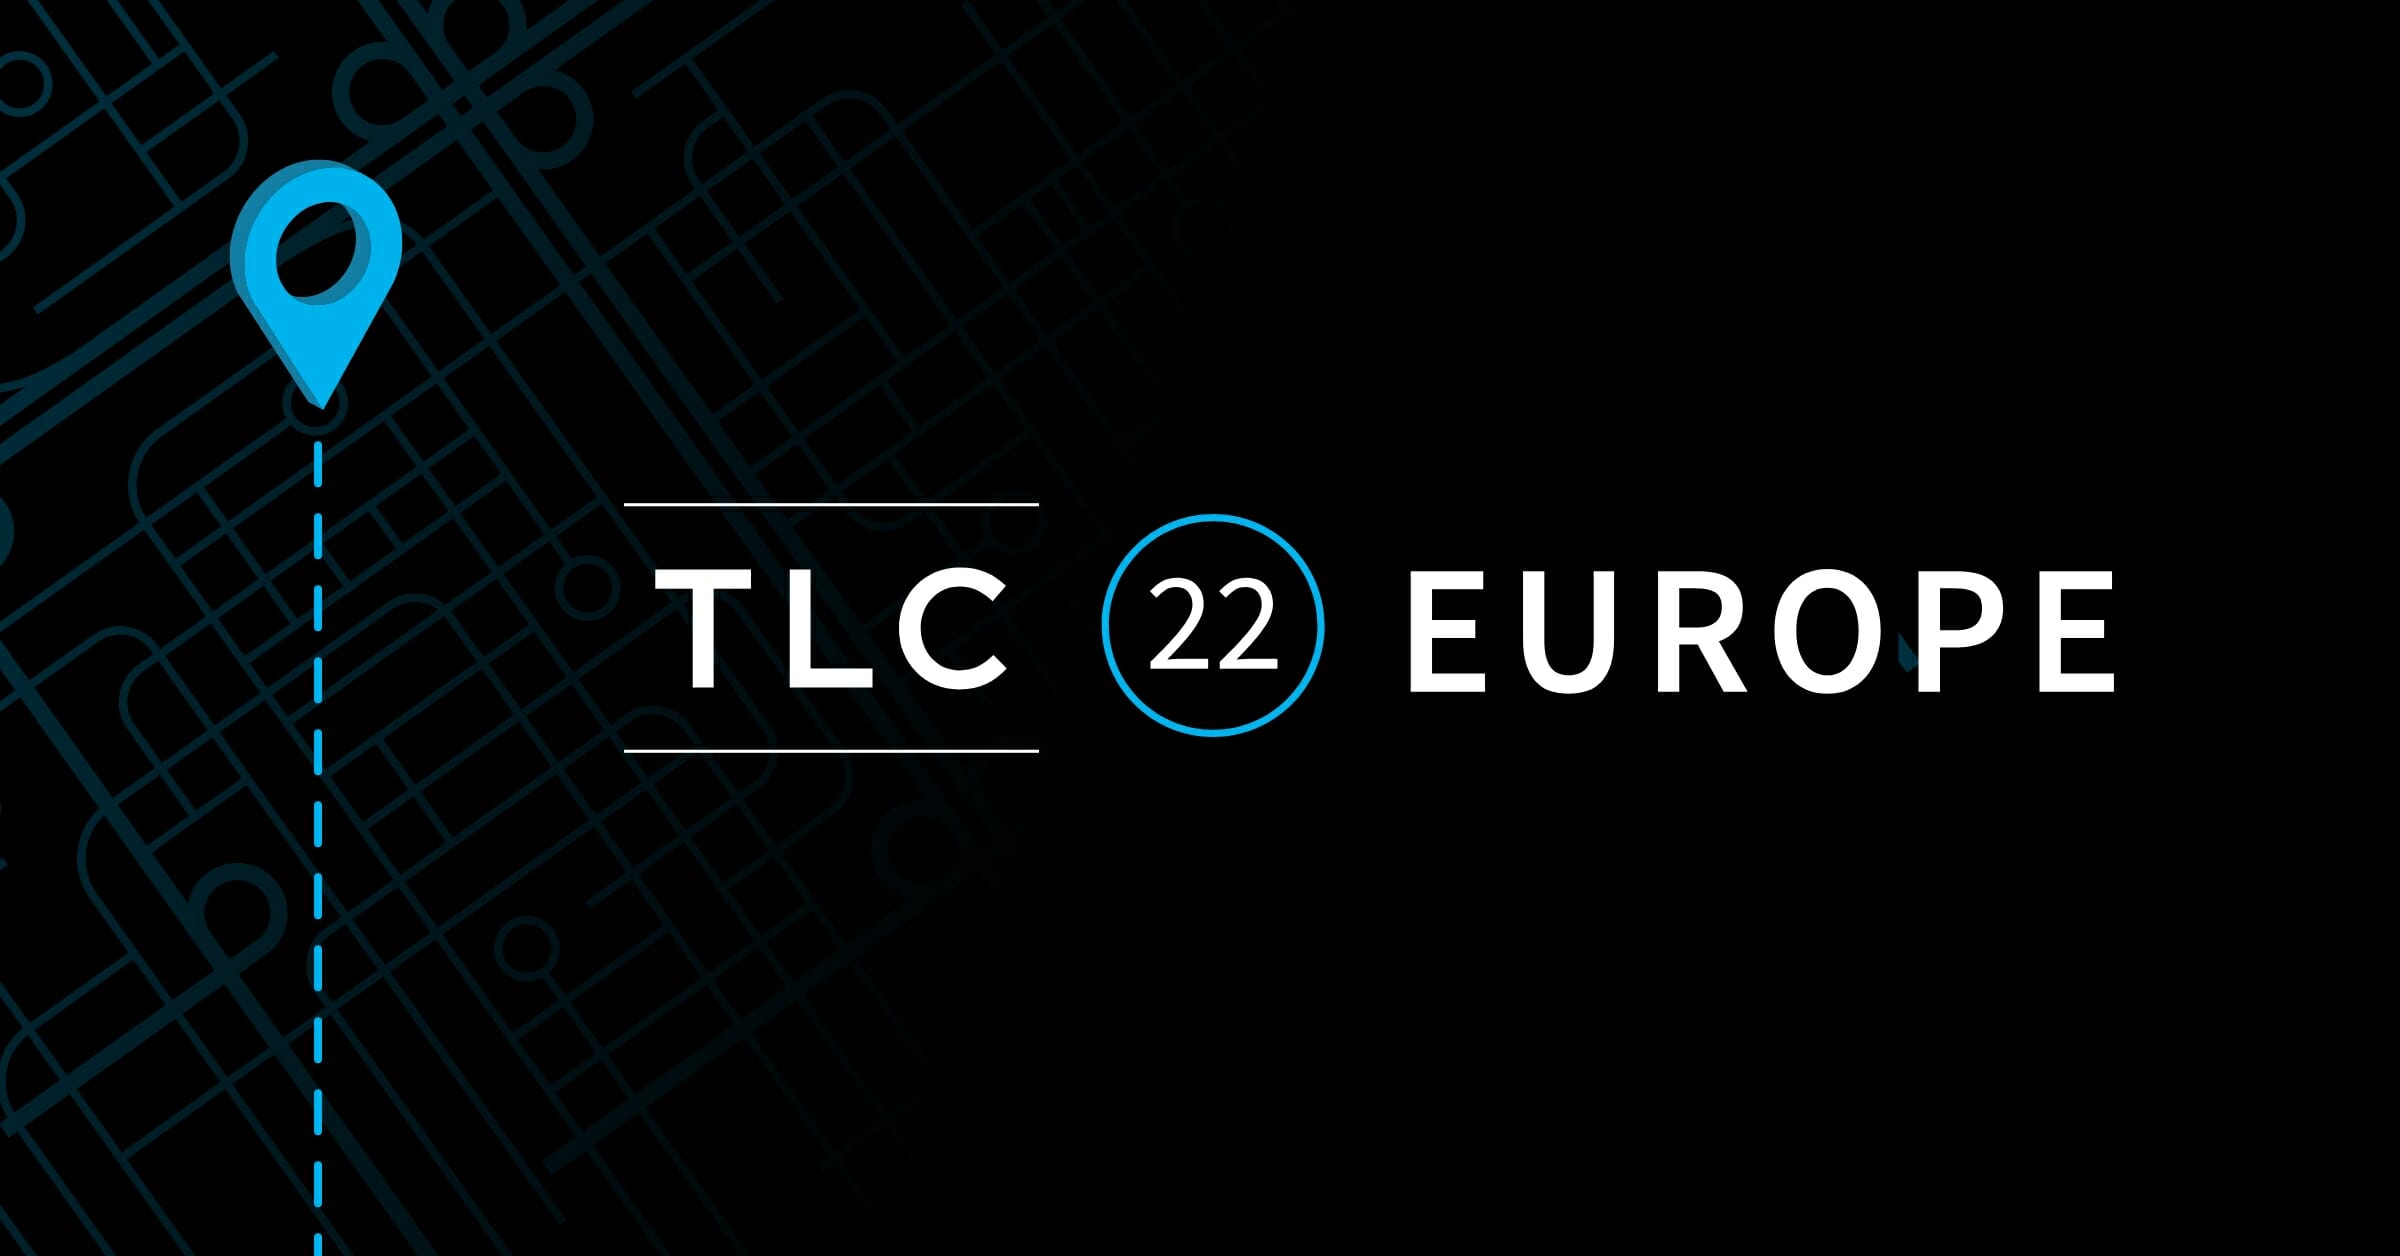 TLC Europe 2022 logo on a black background